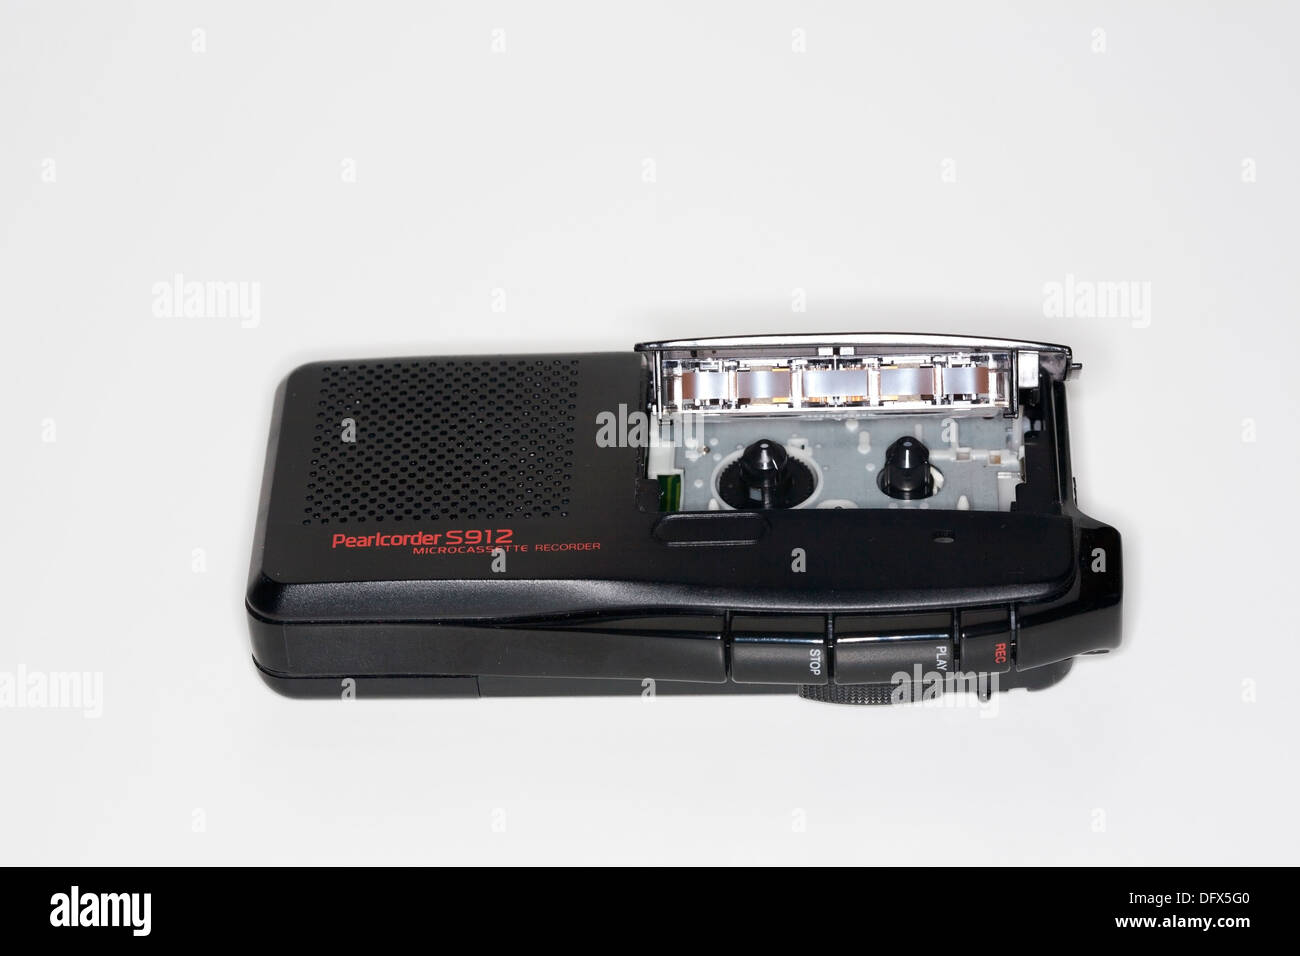 Olympus Pearlcorder S912 Grabadora de microcassette Foto de stock